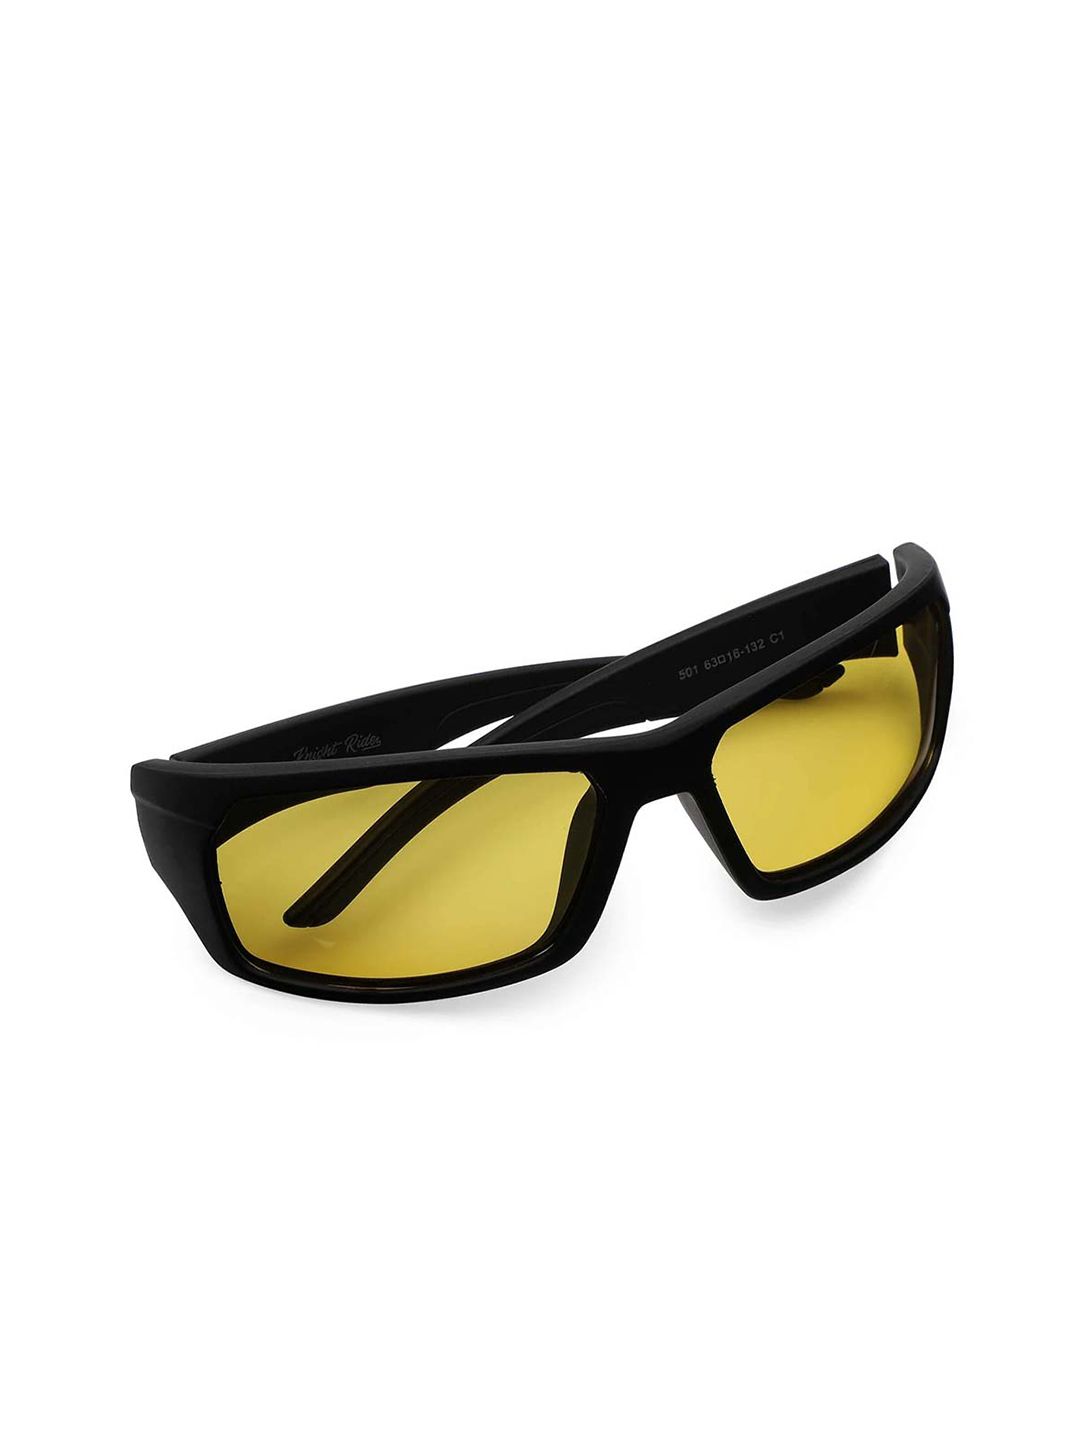 Intellilens Black UV Polarized Anti Glare Night Driving Glasses INTEL109 Price in India